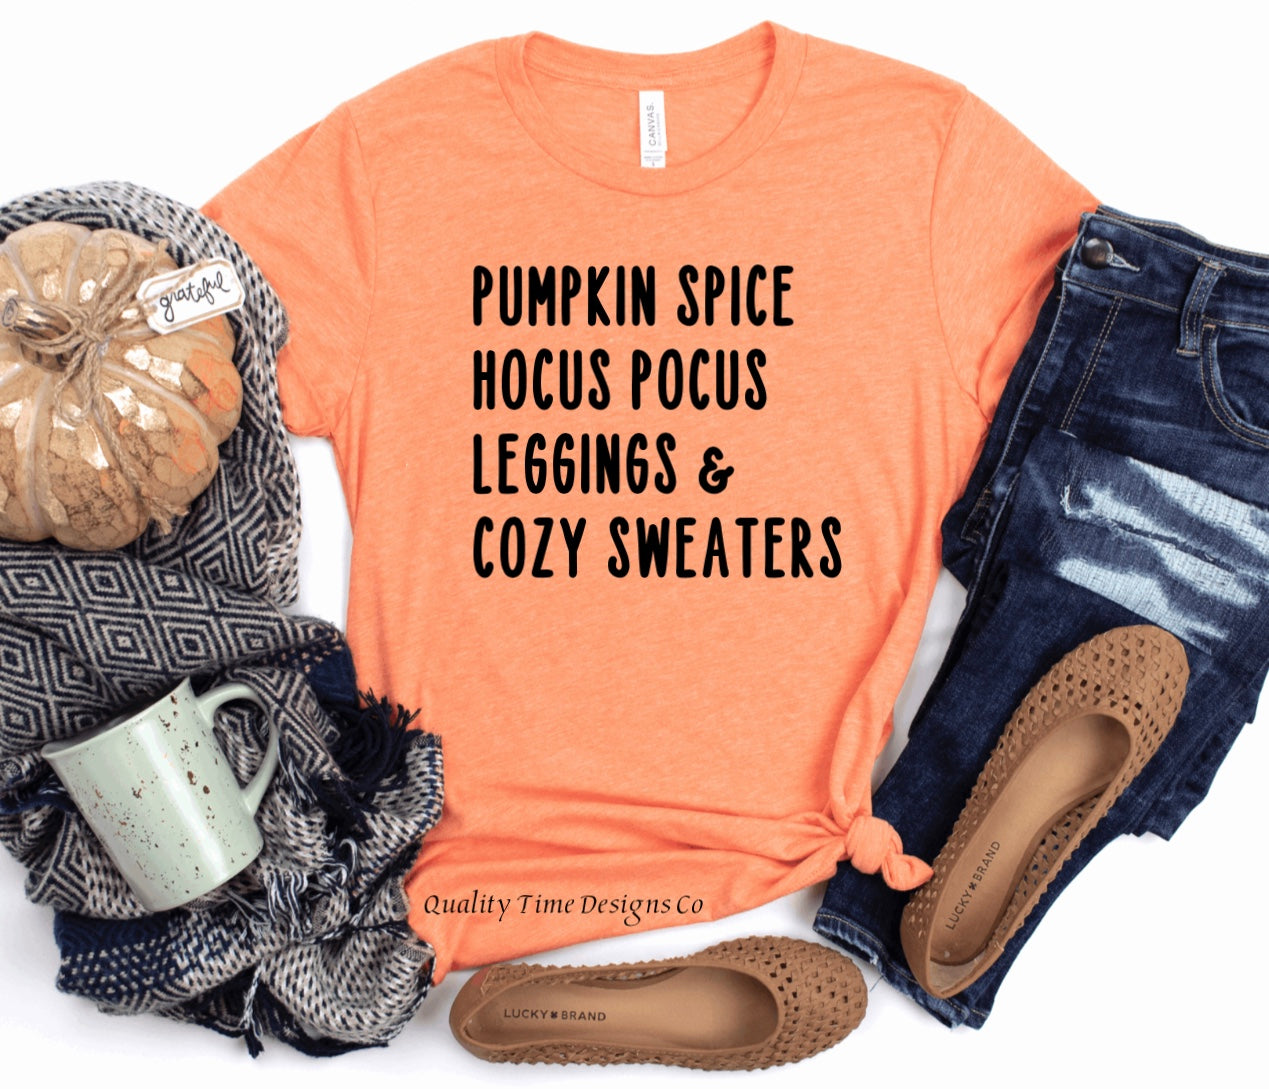 Pumpkin spice Hocus Pocus leggings and cozy sweaters t-shirt 